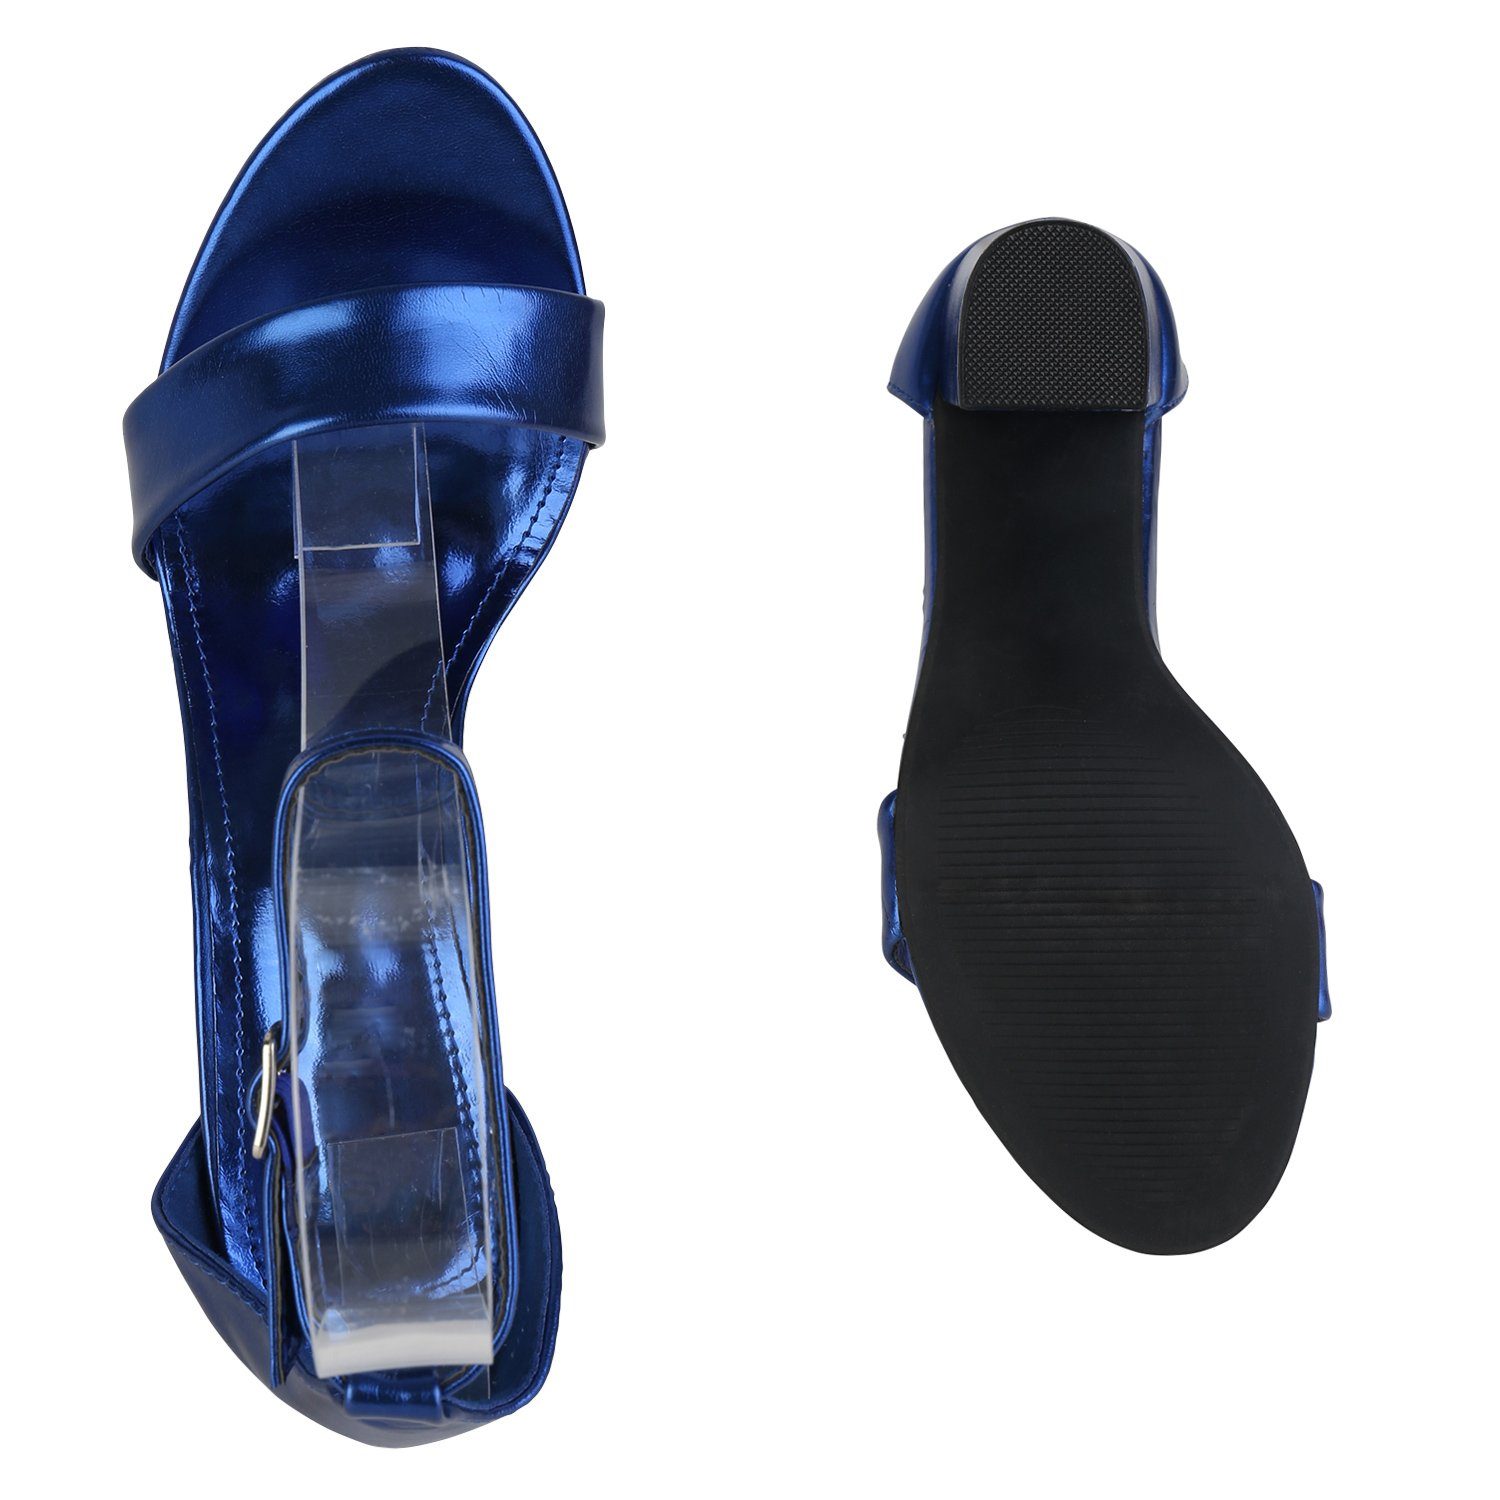 839904 HILL High-Heel-Sandalette Metallic Bequeme VAN Schuhe Blau